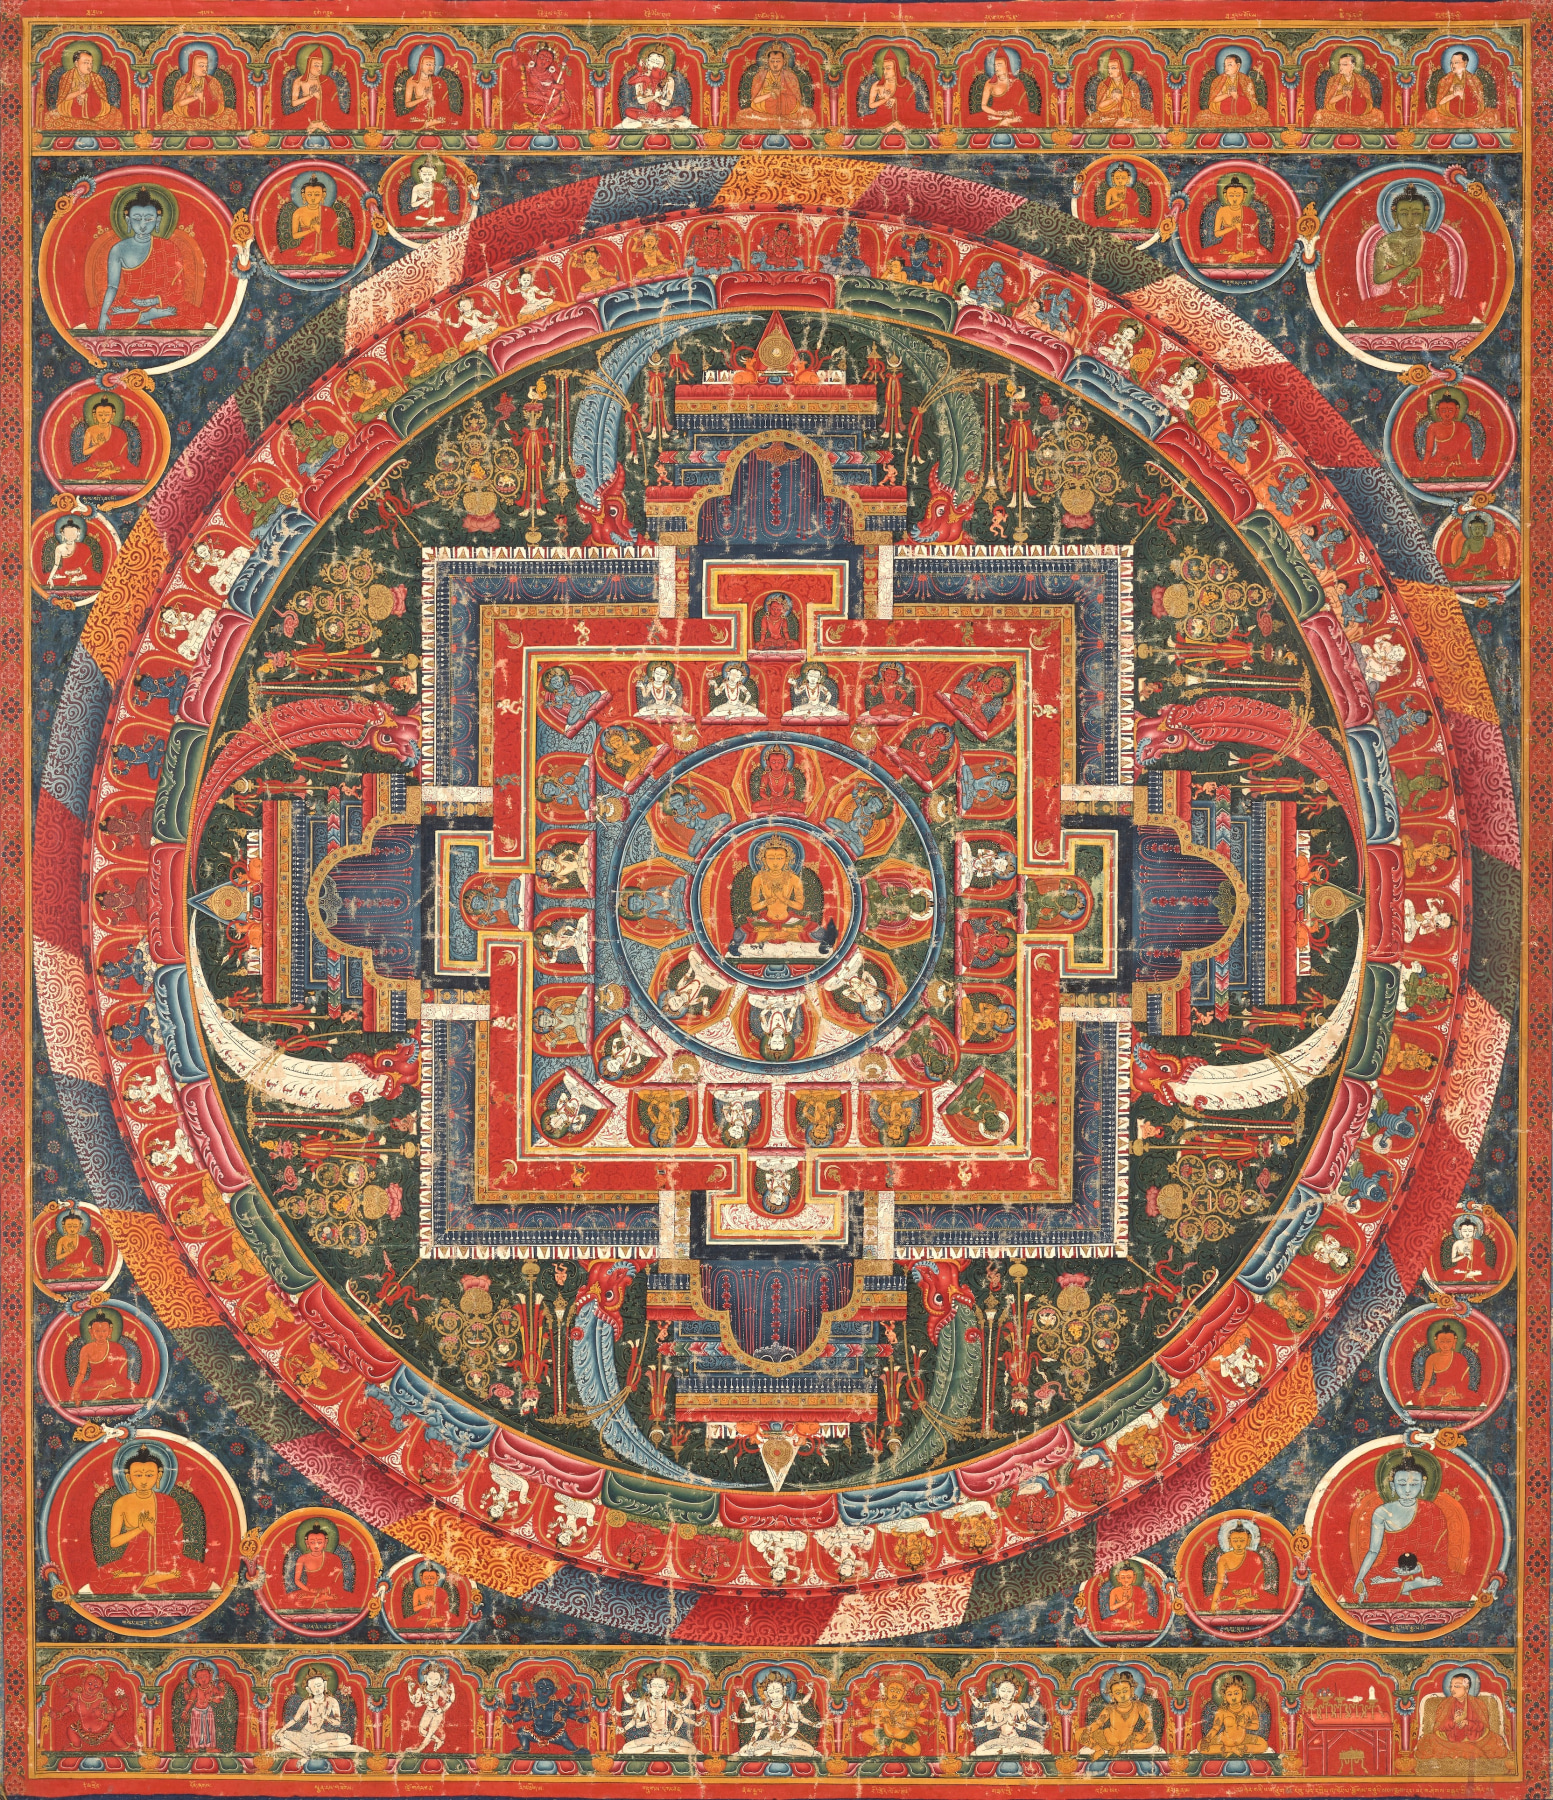 The painting depicts the mandala of Shakyamuni Buddha in the form of Shakya Simha, as described in the Vajravali (Adamantine Garland) treatise by Abhayakaragupta